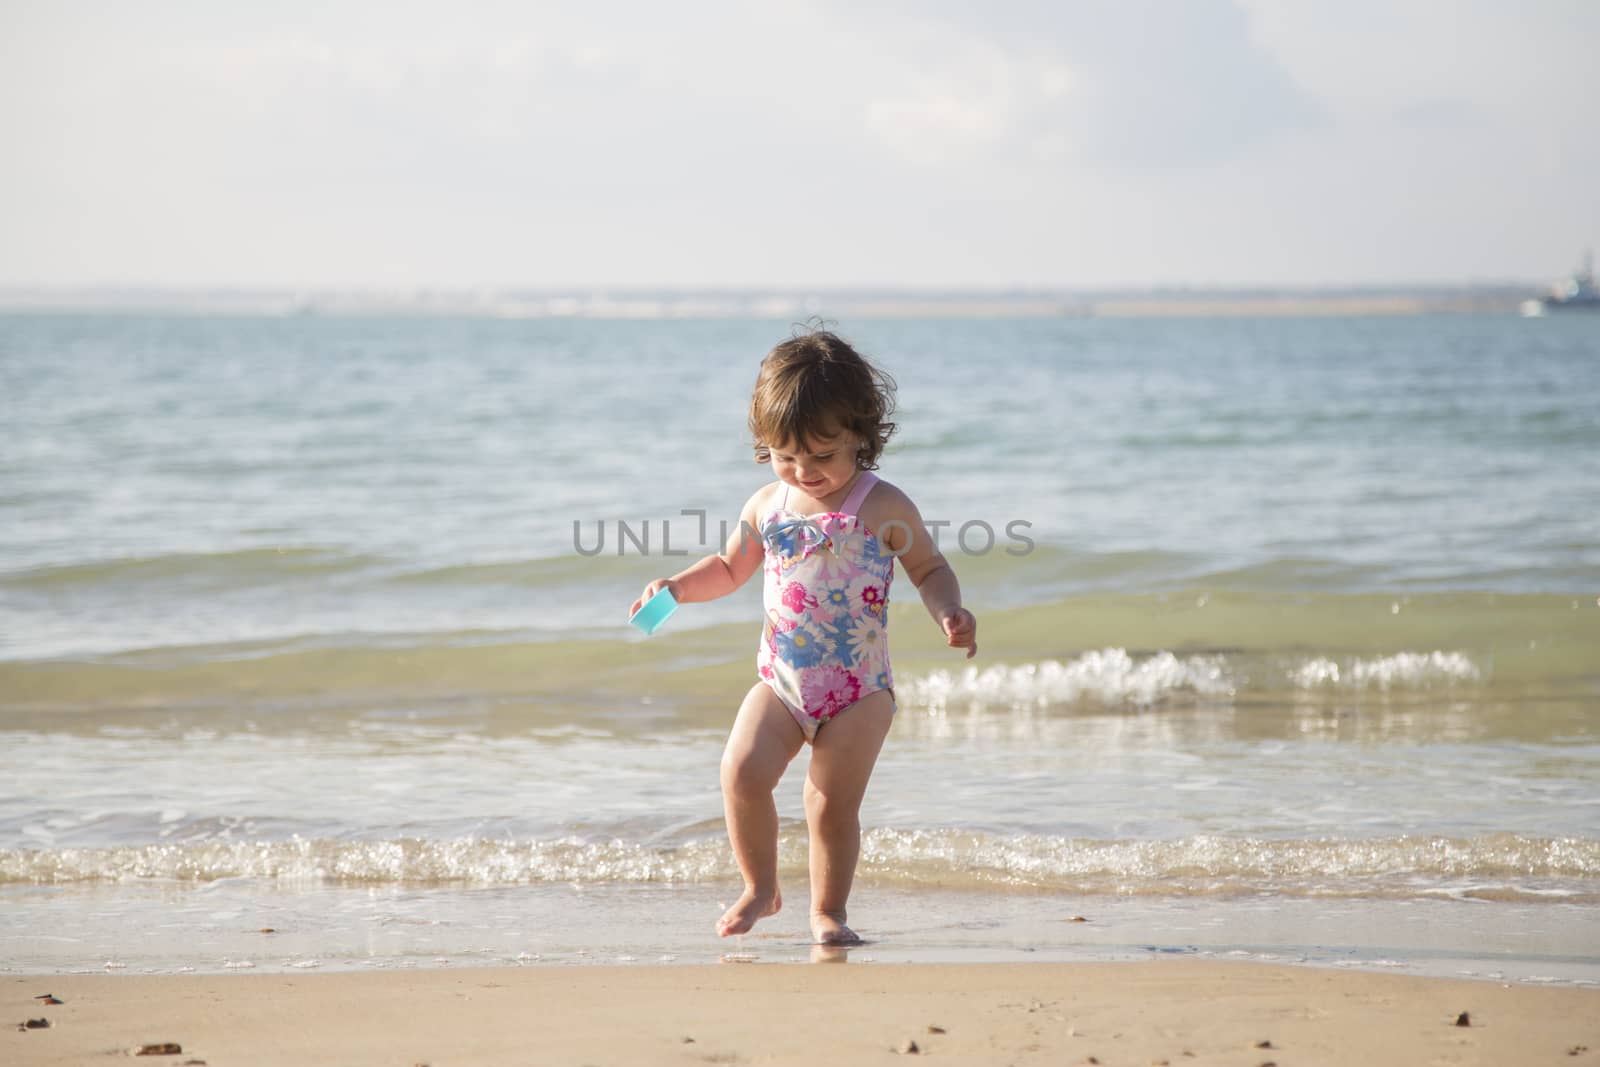 Infant on beach by mattkusb